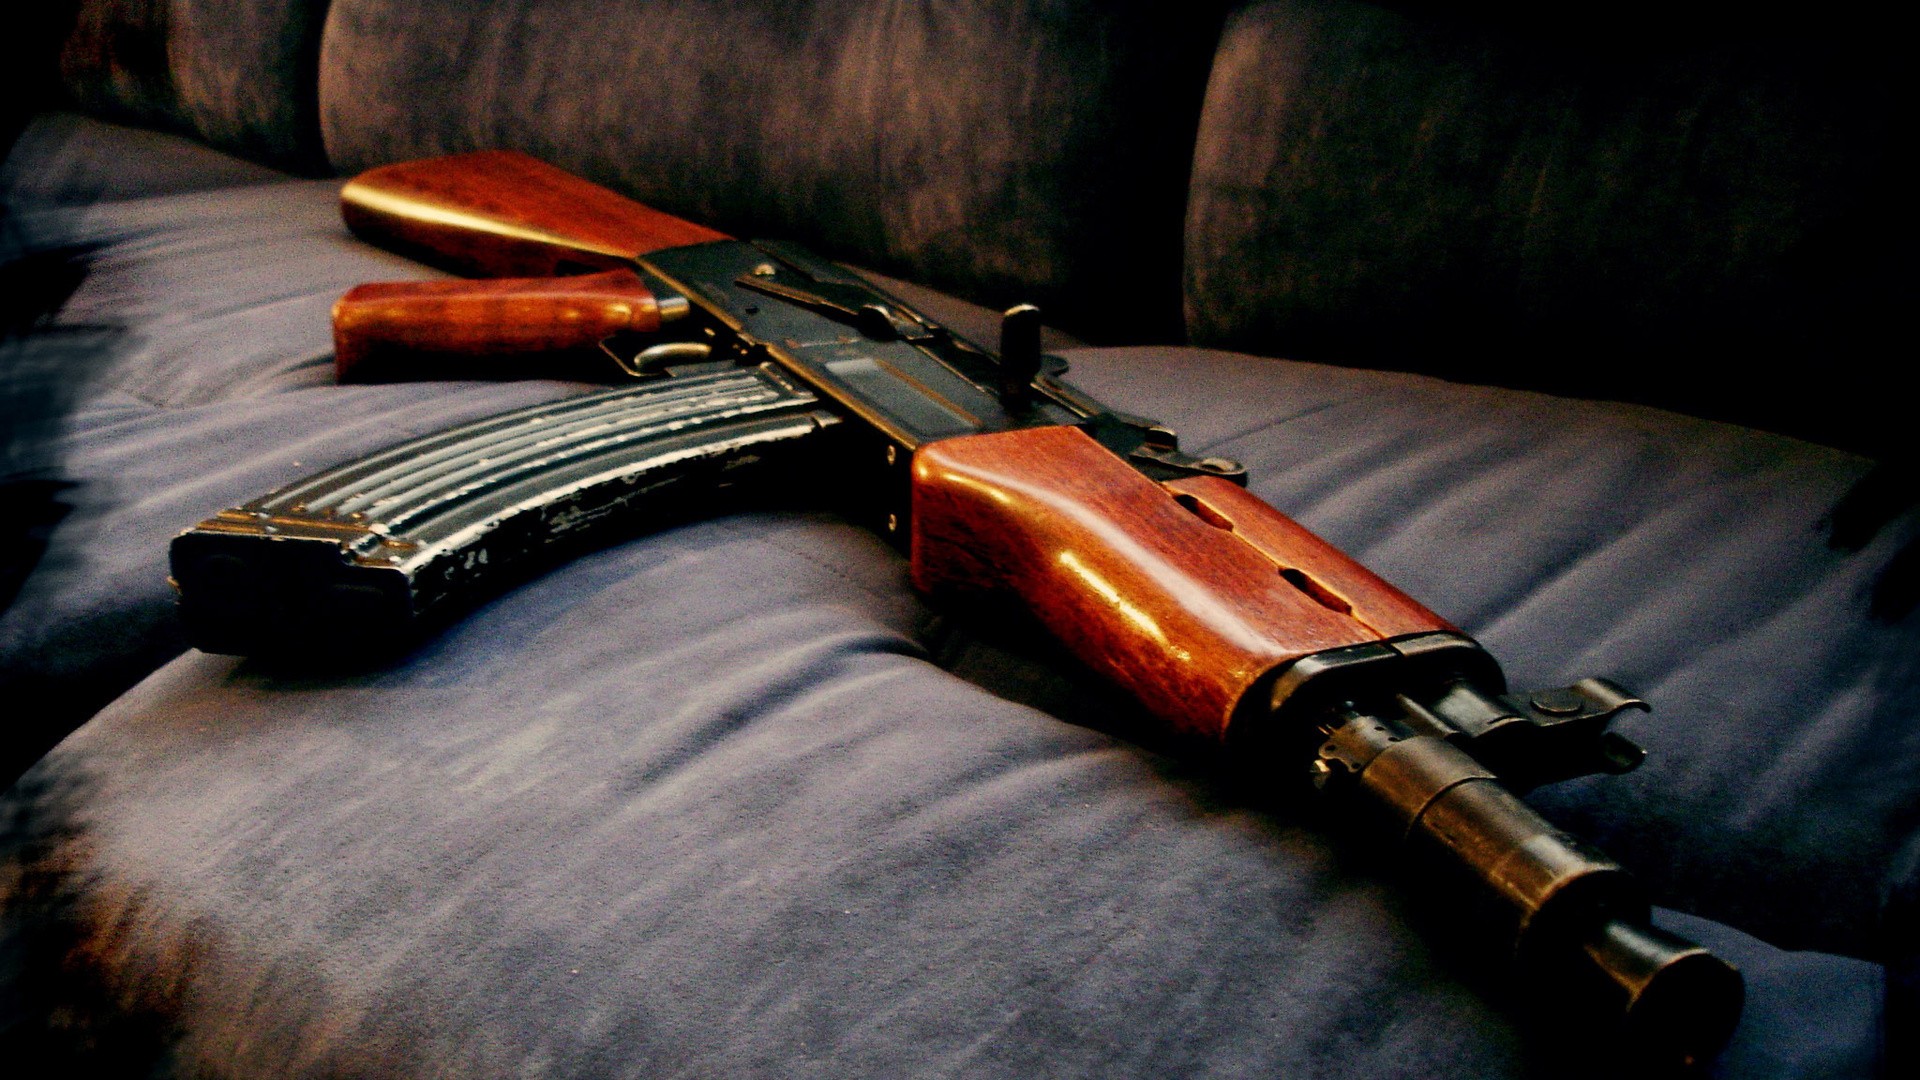 General 1920x1080 AKS-74U weapon couch carbine Russian/Soviet firearms